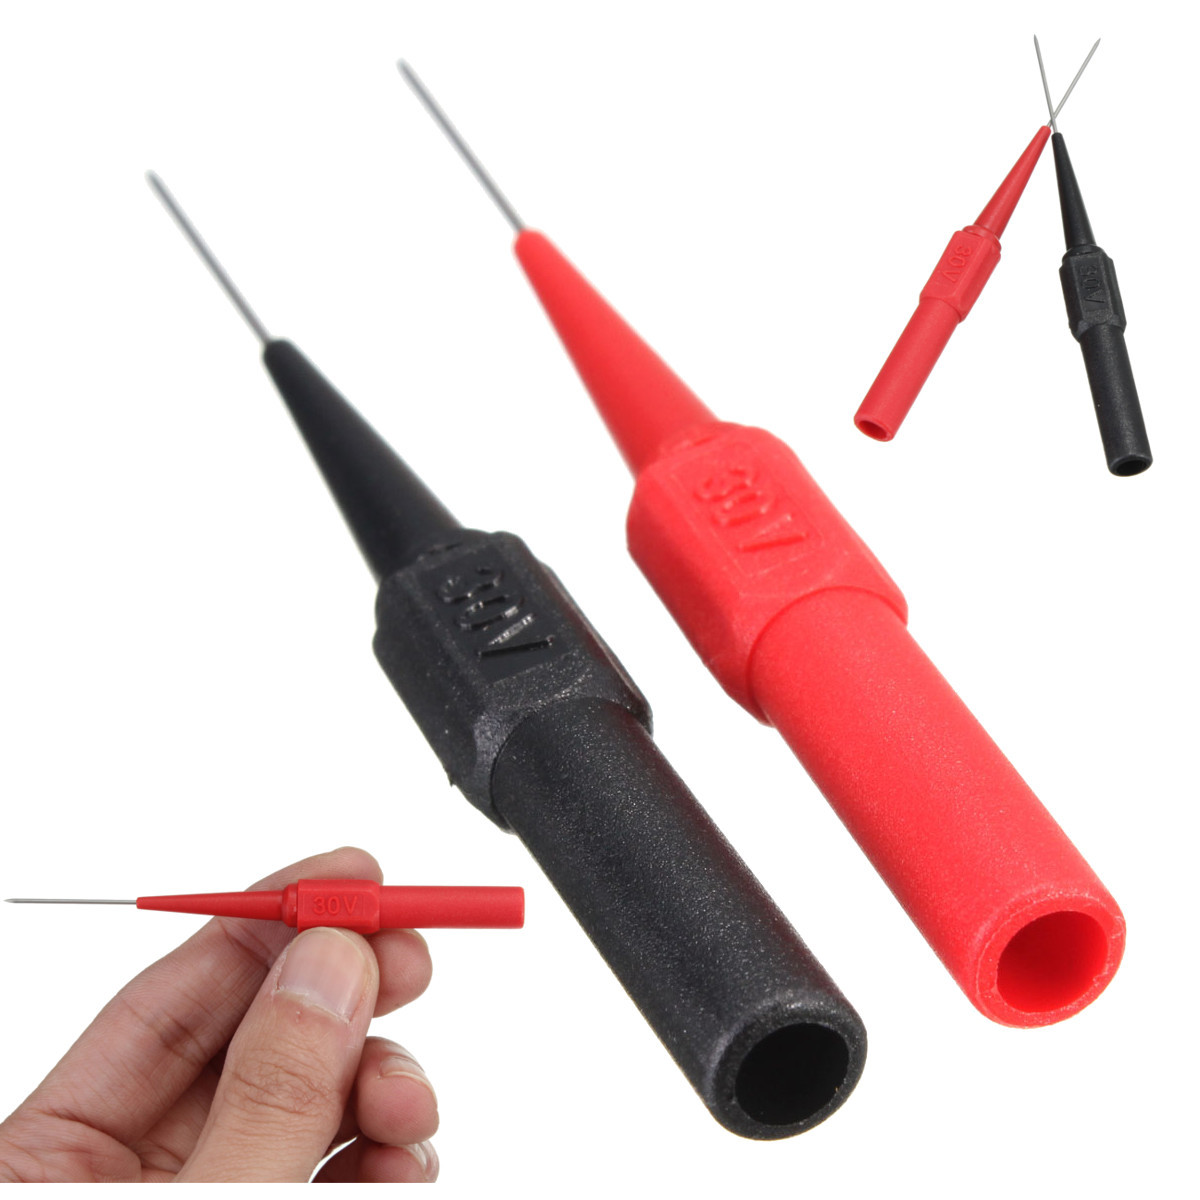 2 Pcs 30V-60V Insulation Piercing Needle Non-destructive Test Probes To`fi 